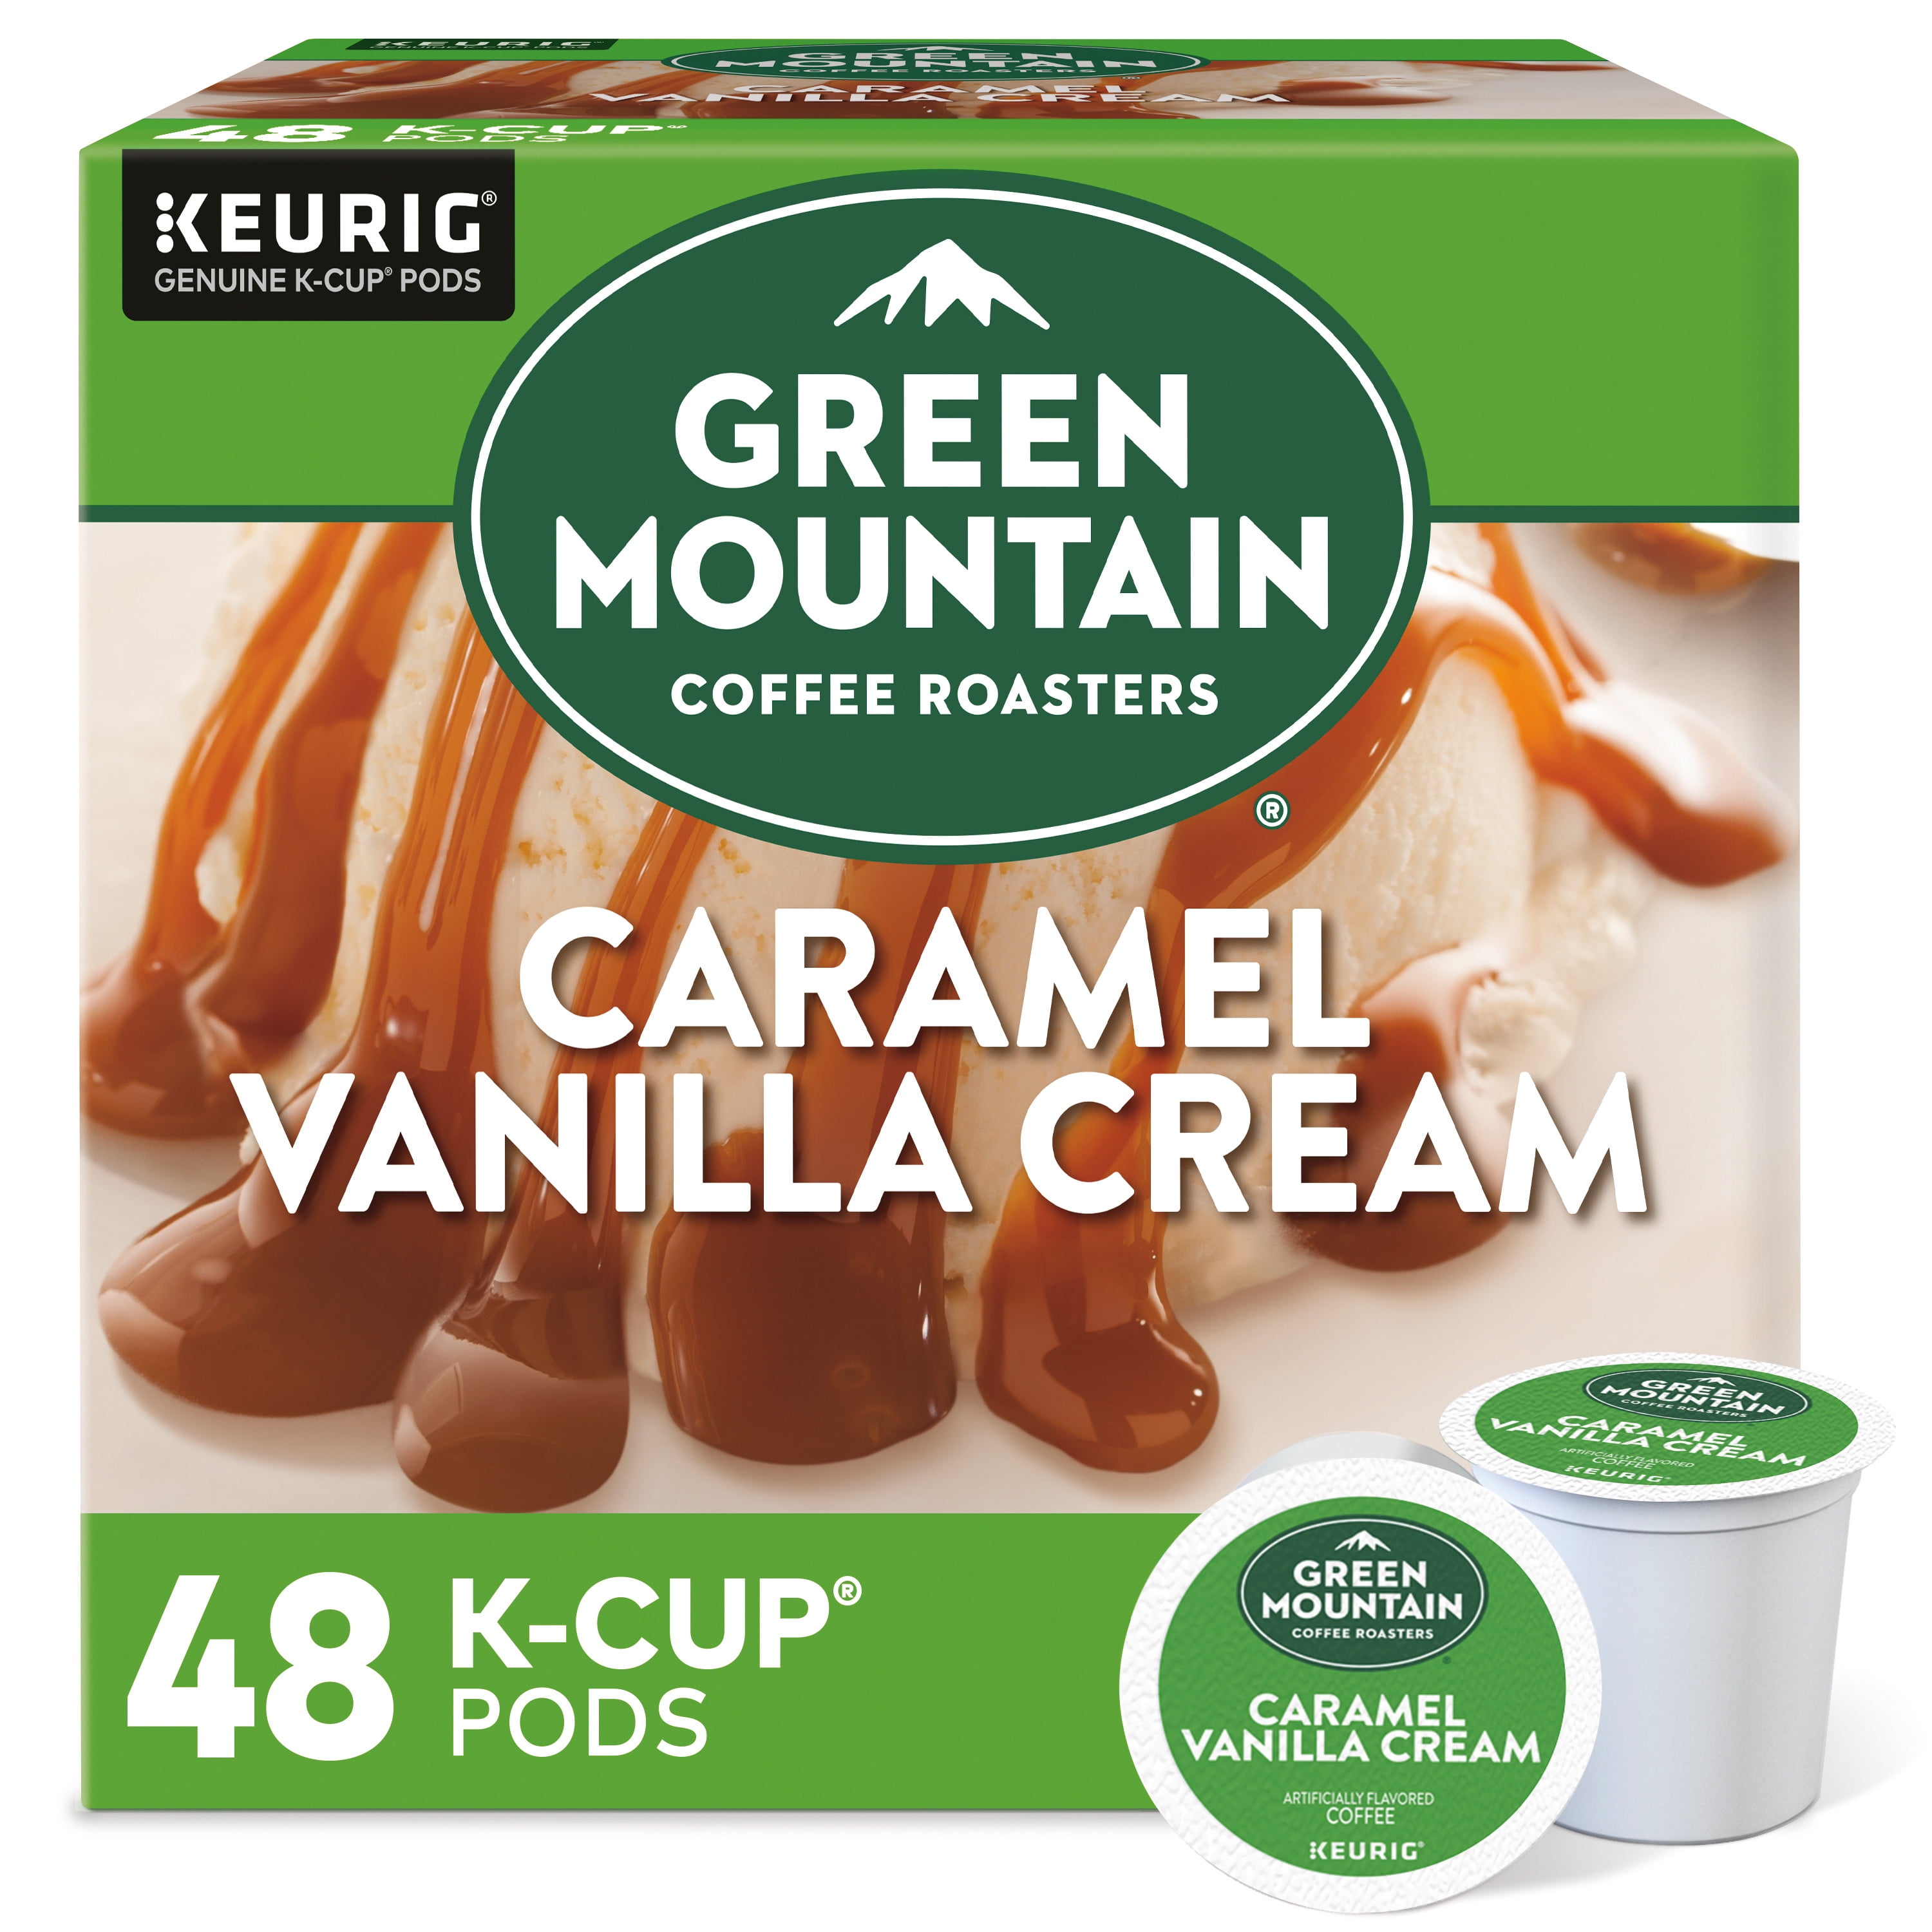 Green Mountain Coffee Caramel Vanilla Cream Keurig Single-Serve K-Cup pods, Light Roast Coffee, 48 Count